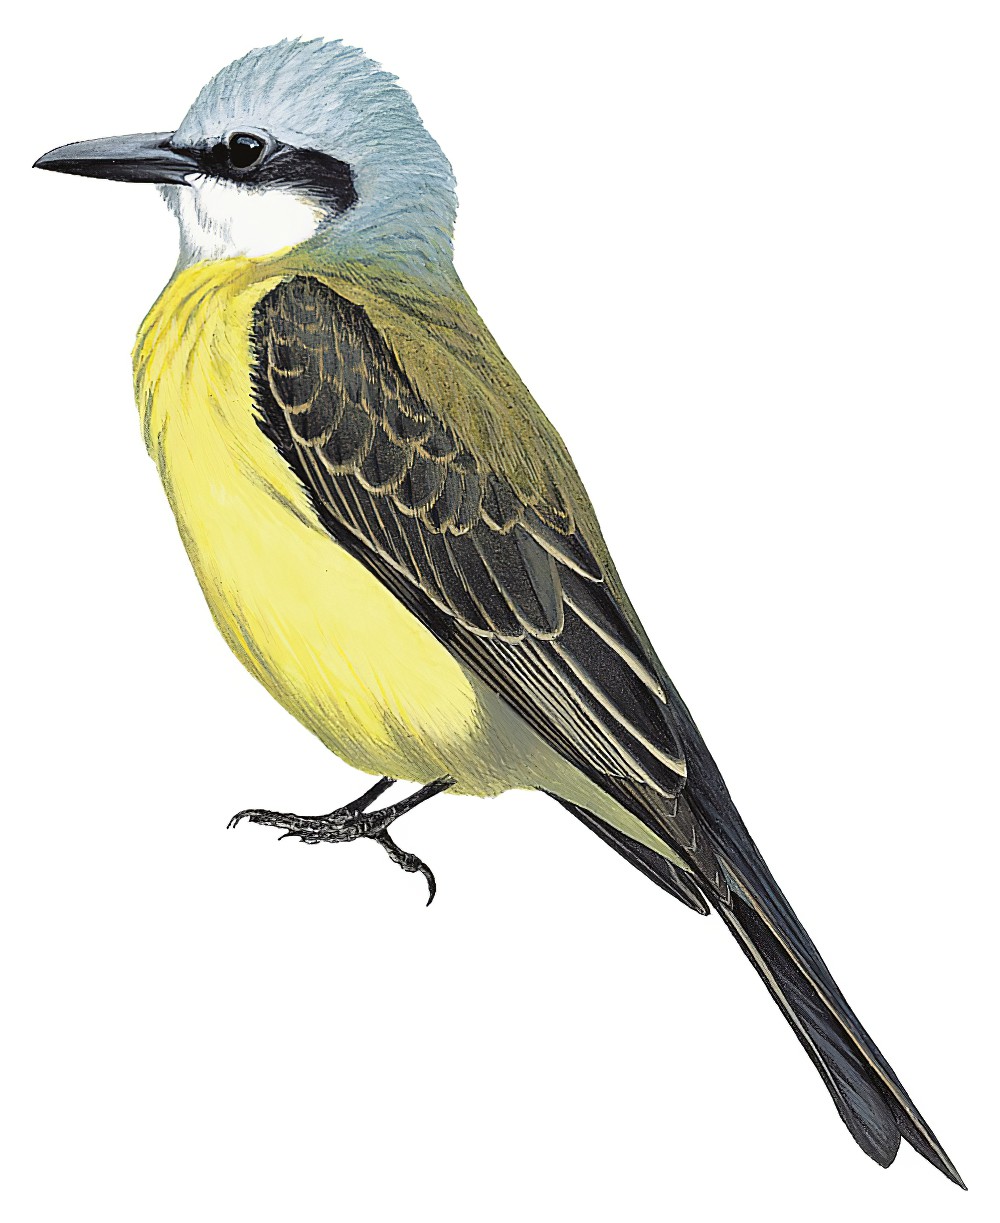 White-throated Kingbird / Tyrannus albogularis